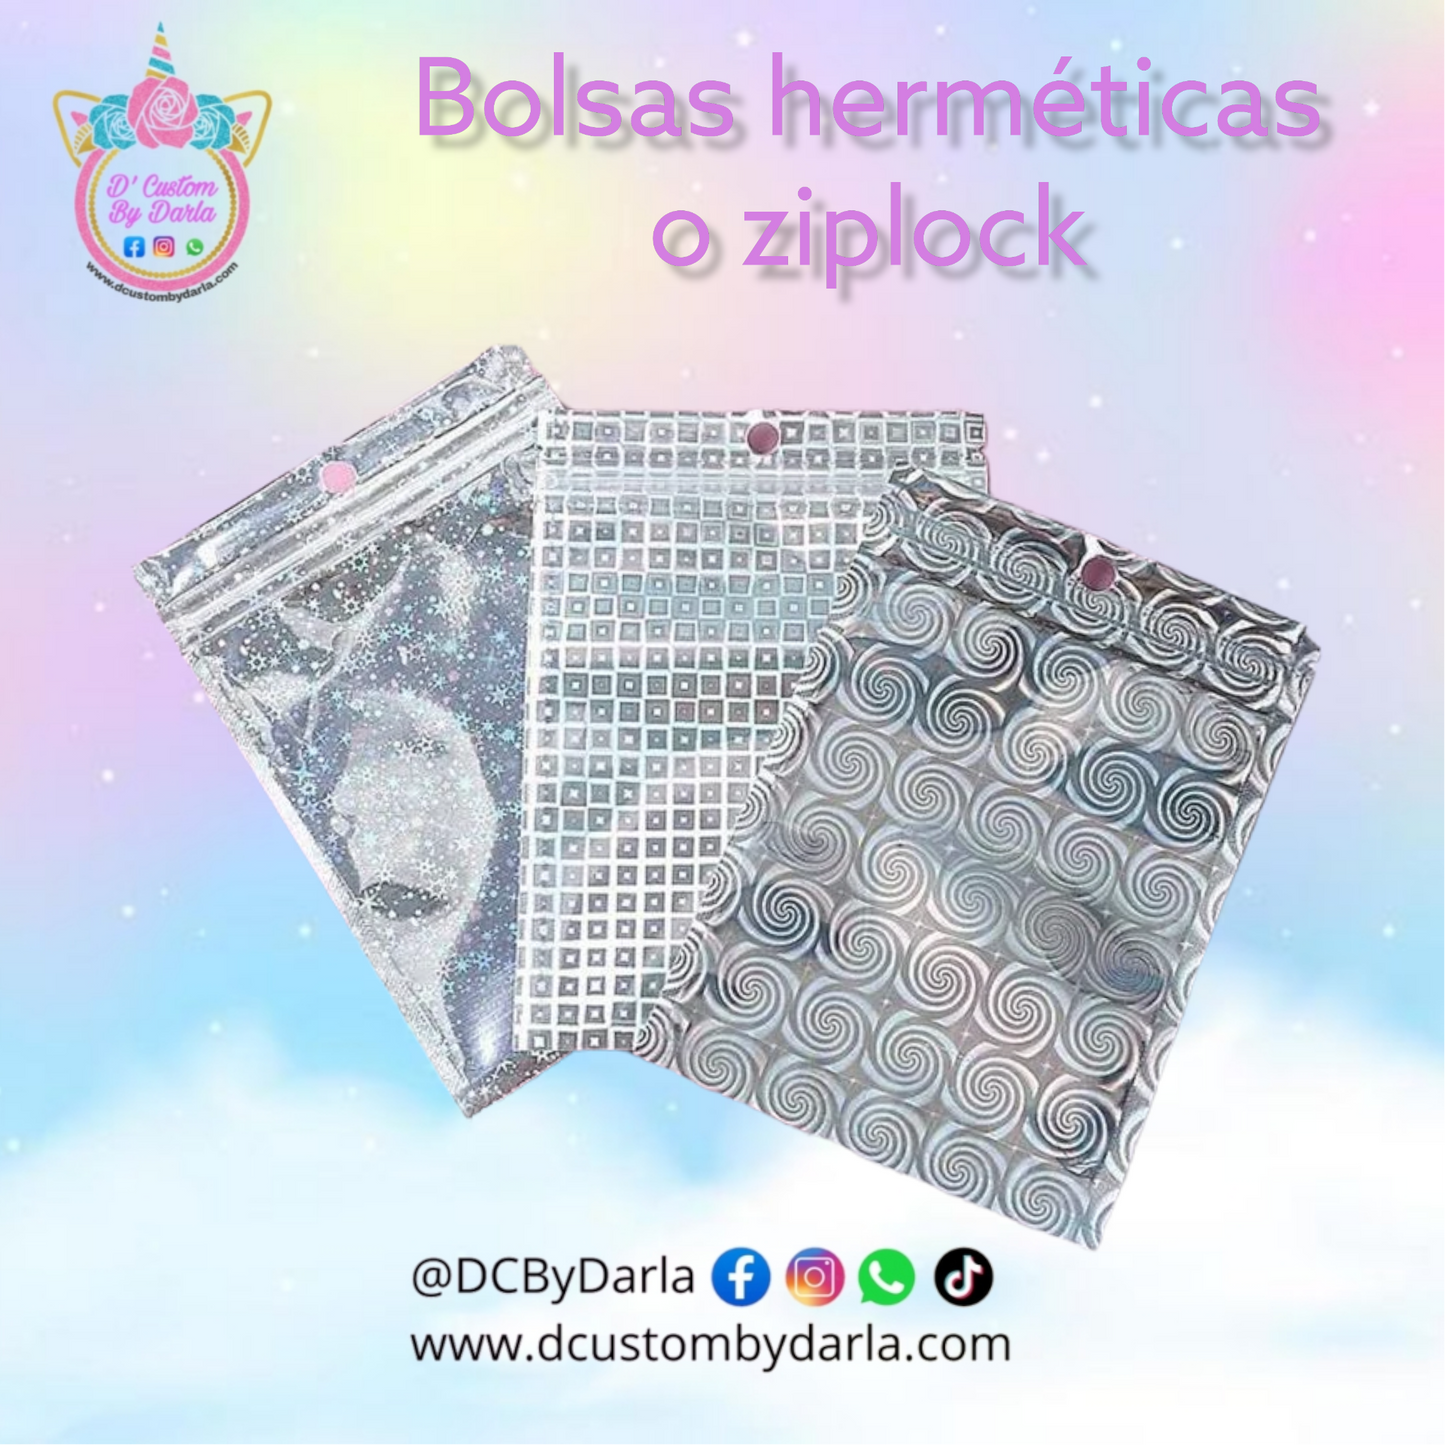 Bolsas hermeticas holo mix 2x3in